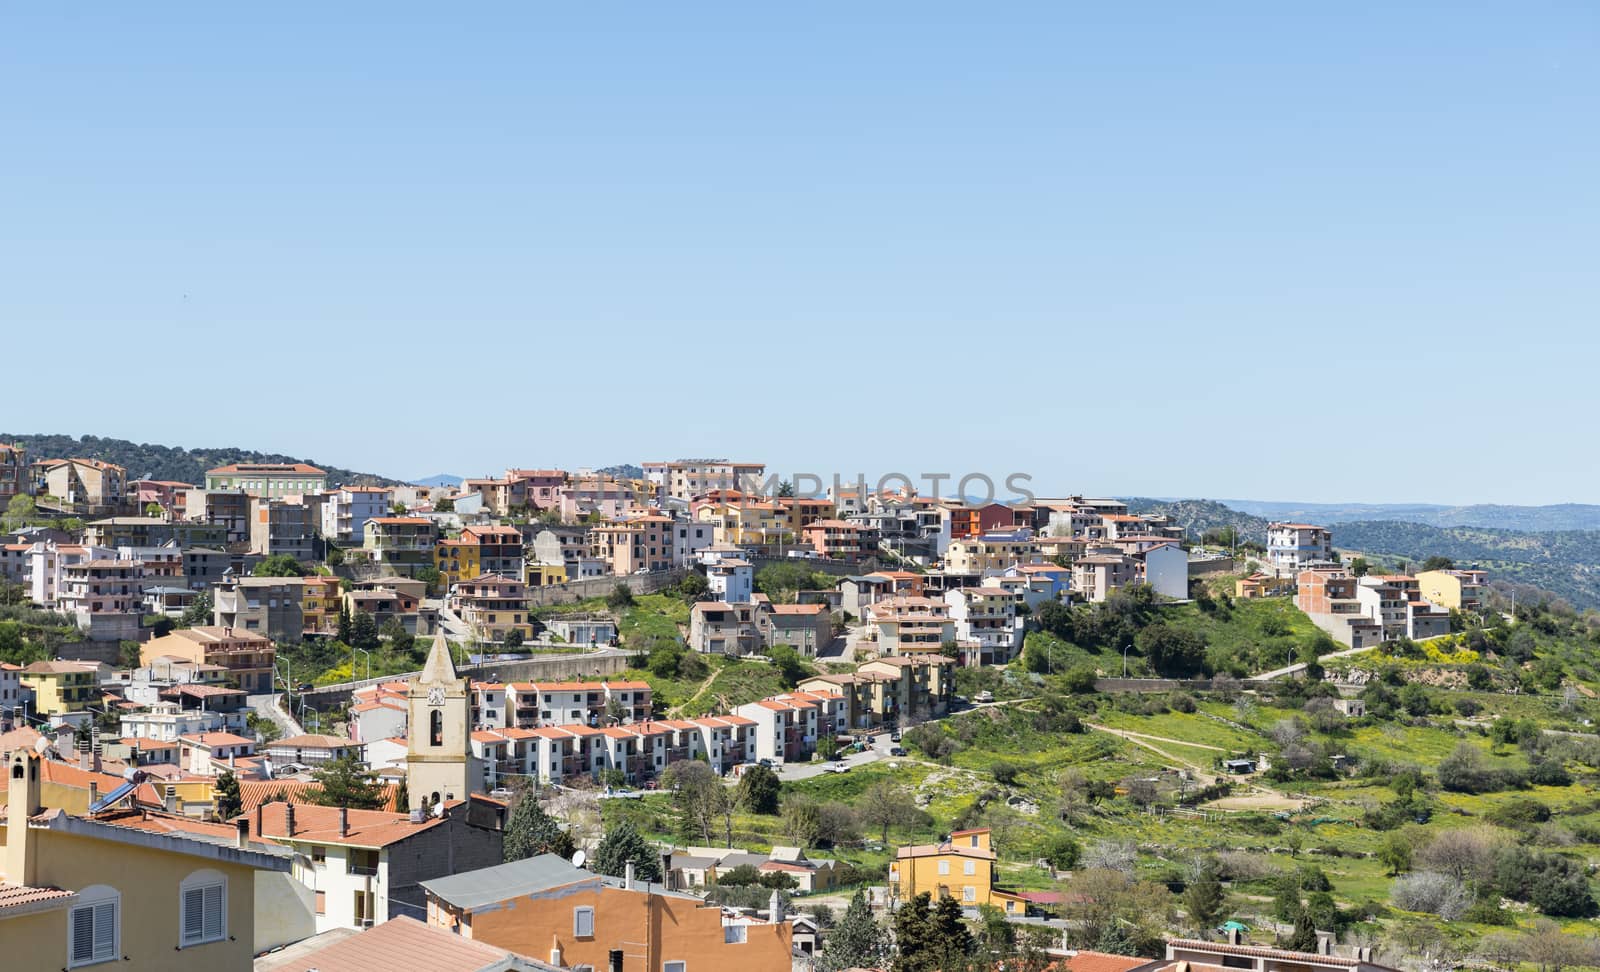 View over Orgosolo , province Nuoro, Sardinia, island of Italy